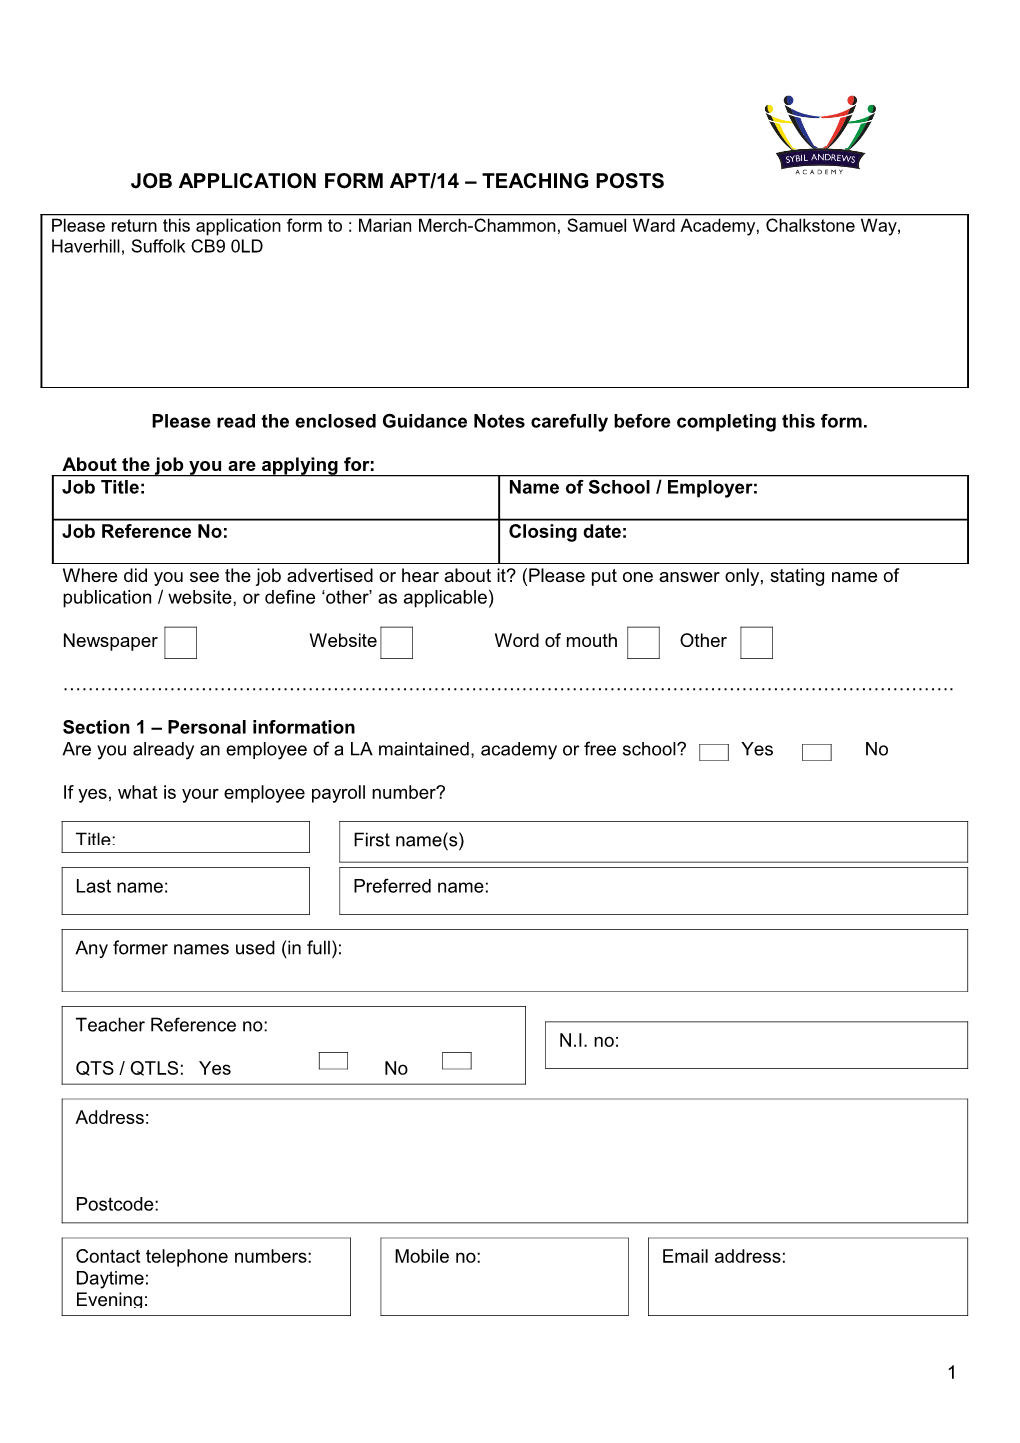 Job Application Form Apt/09 Teaching Posts